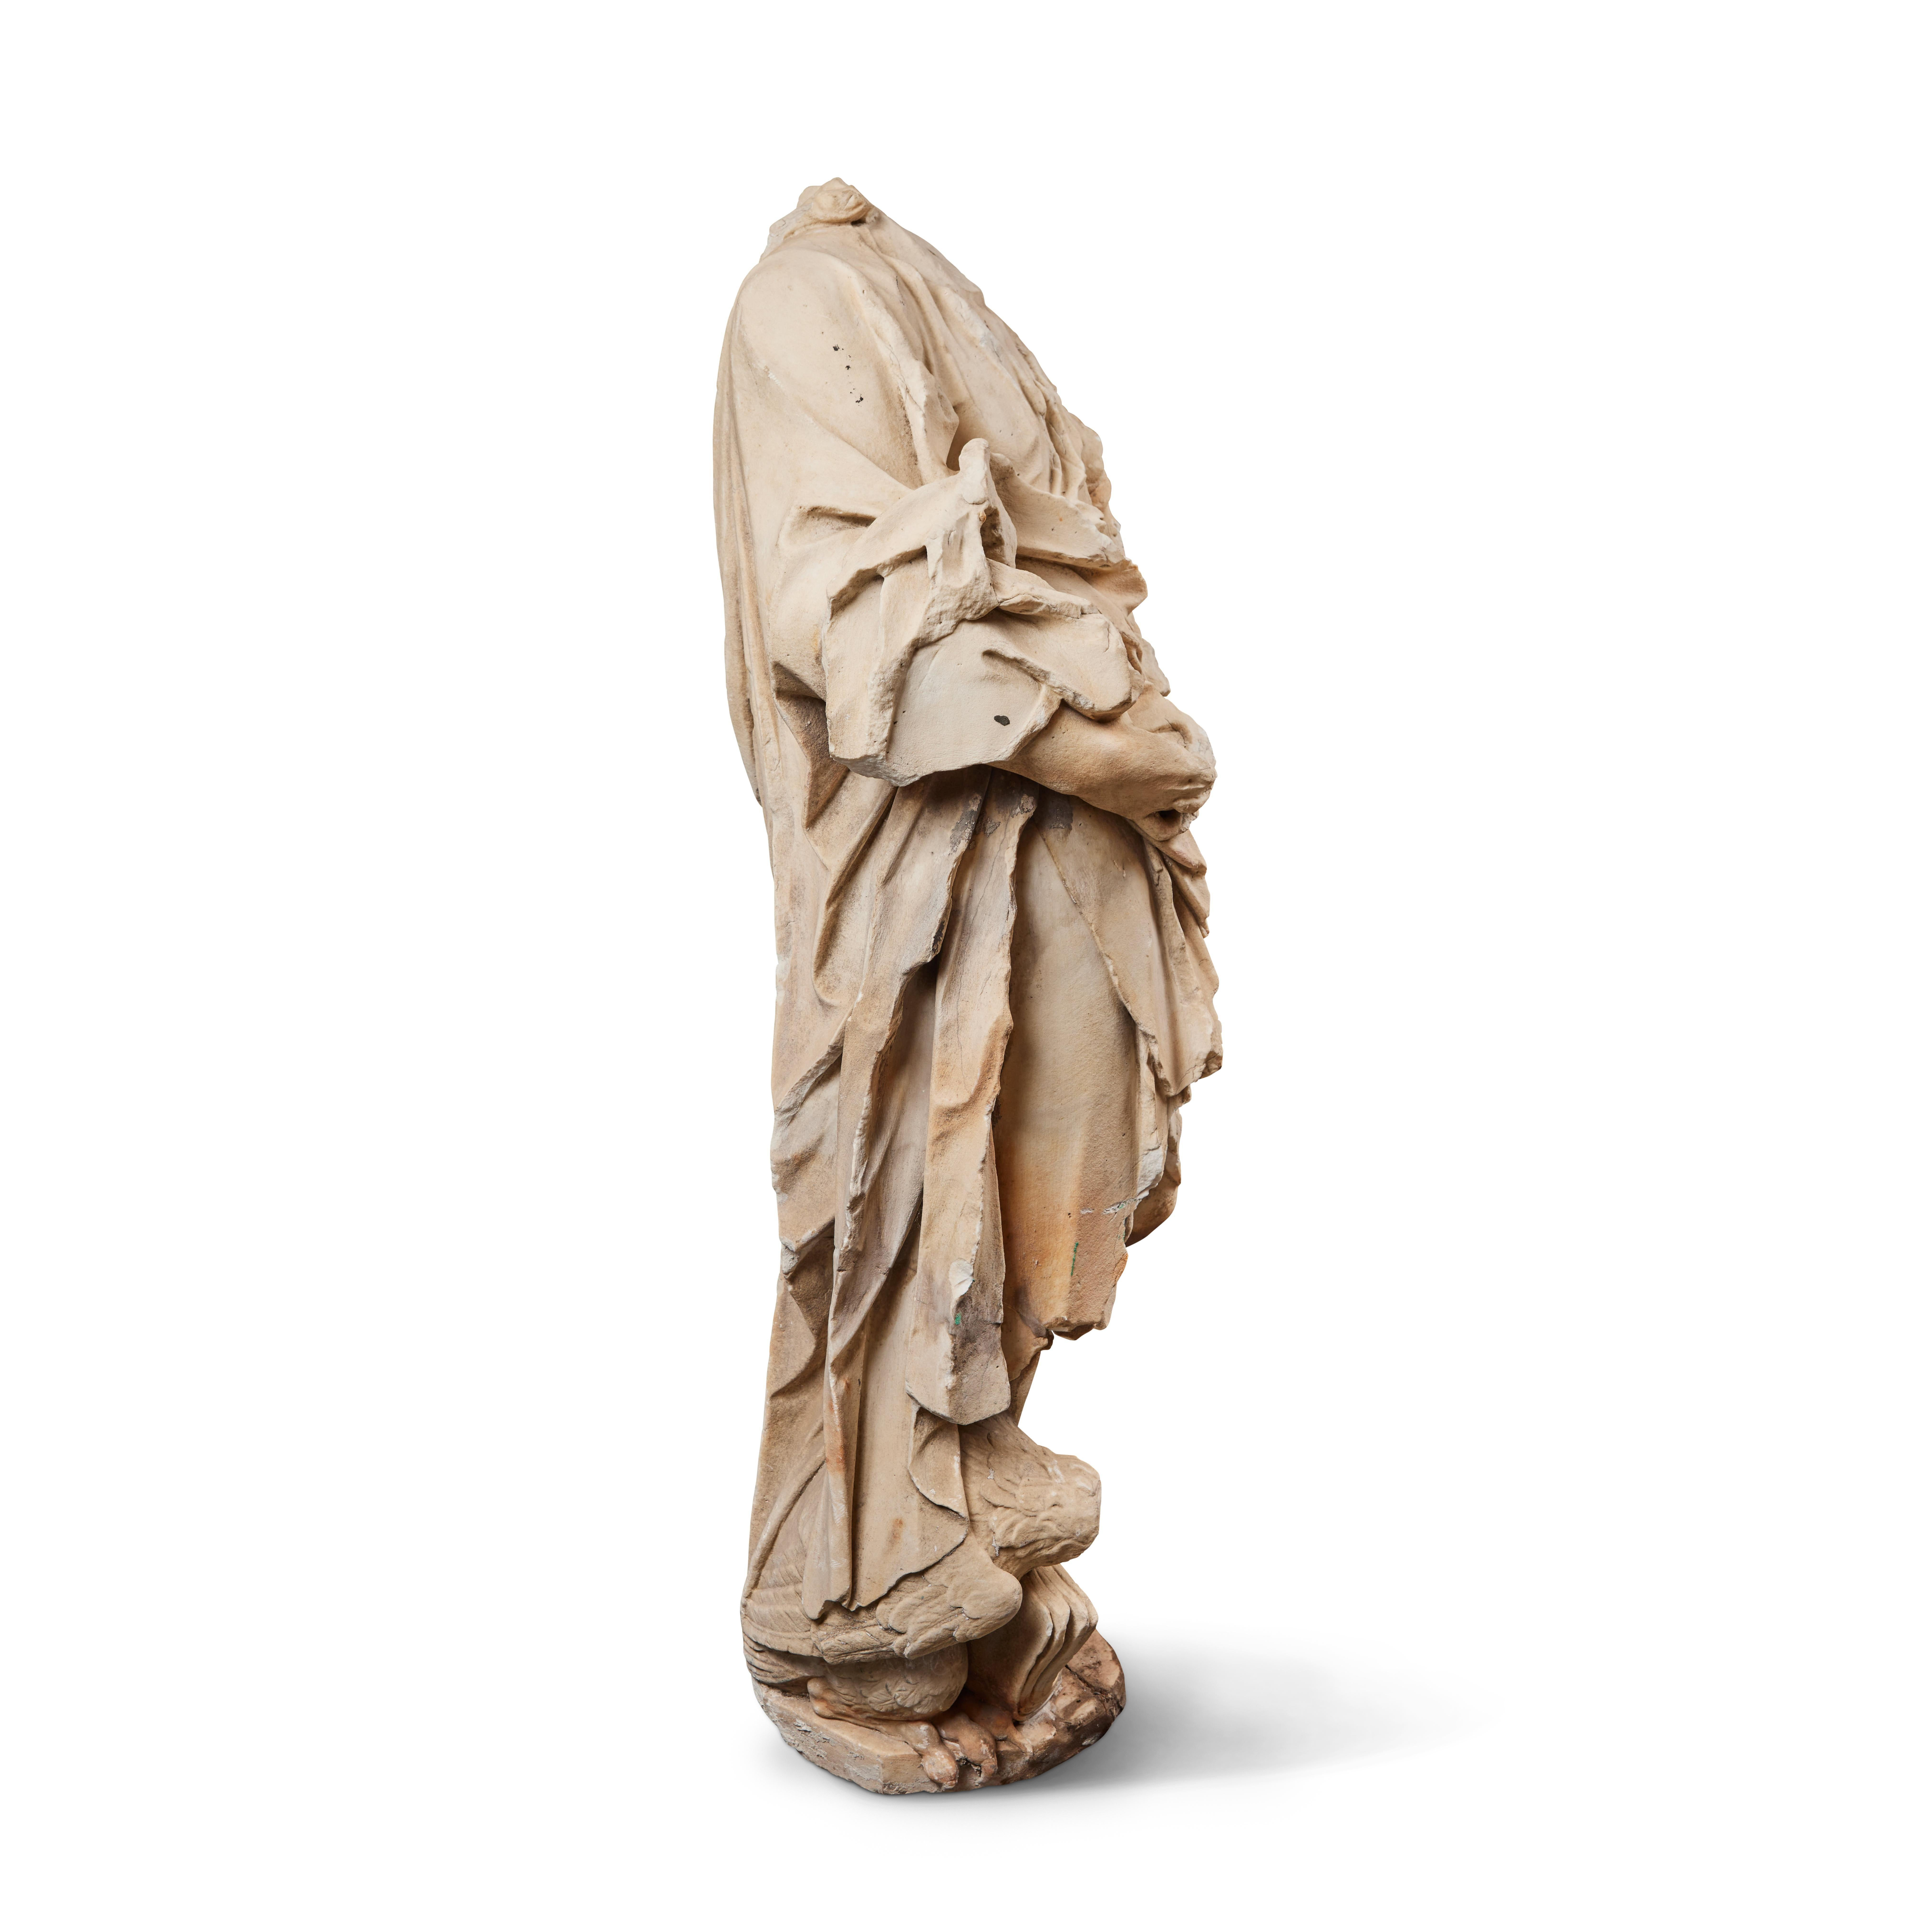 Renaissance Era Marble Figure Fragment - Baroque Sculpture by Unknown